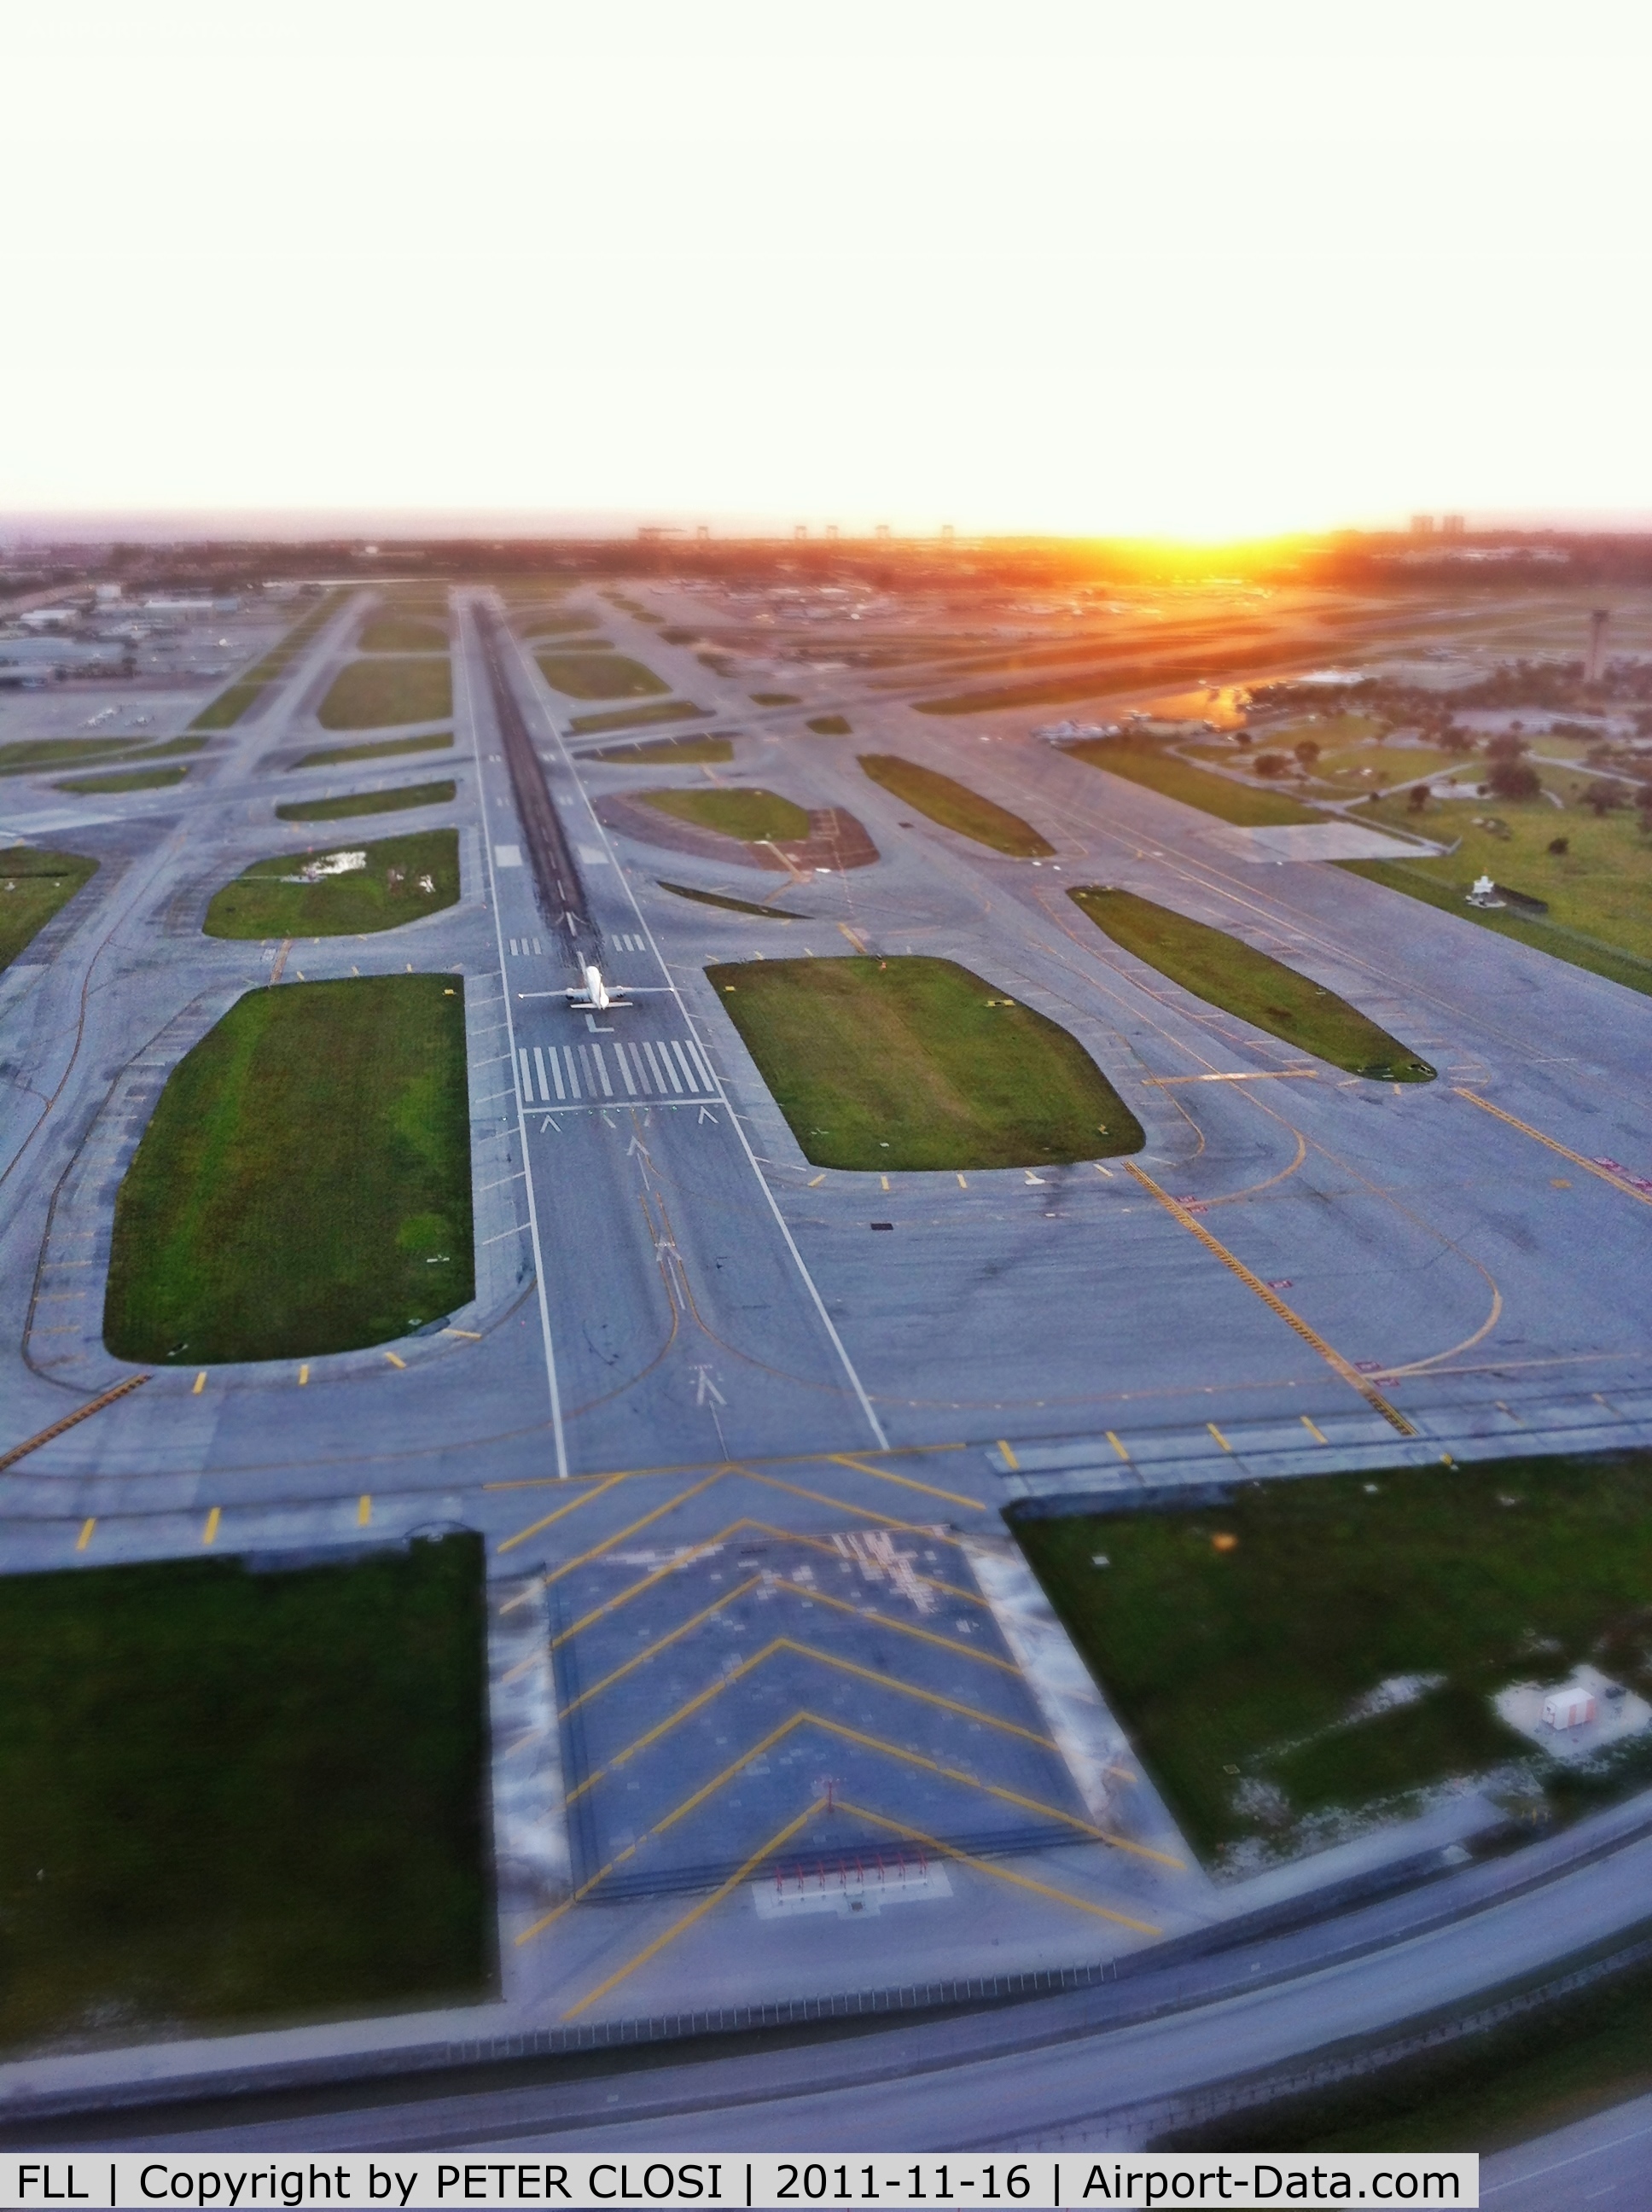 Fort Lauderdale/hollywood International Airport (FLL) - Sunrise over Runway 9L